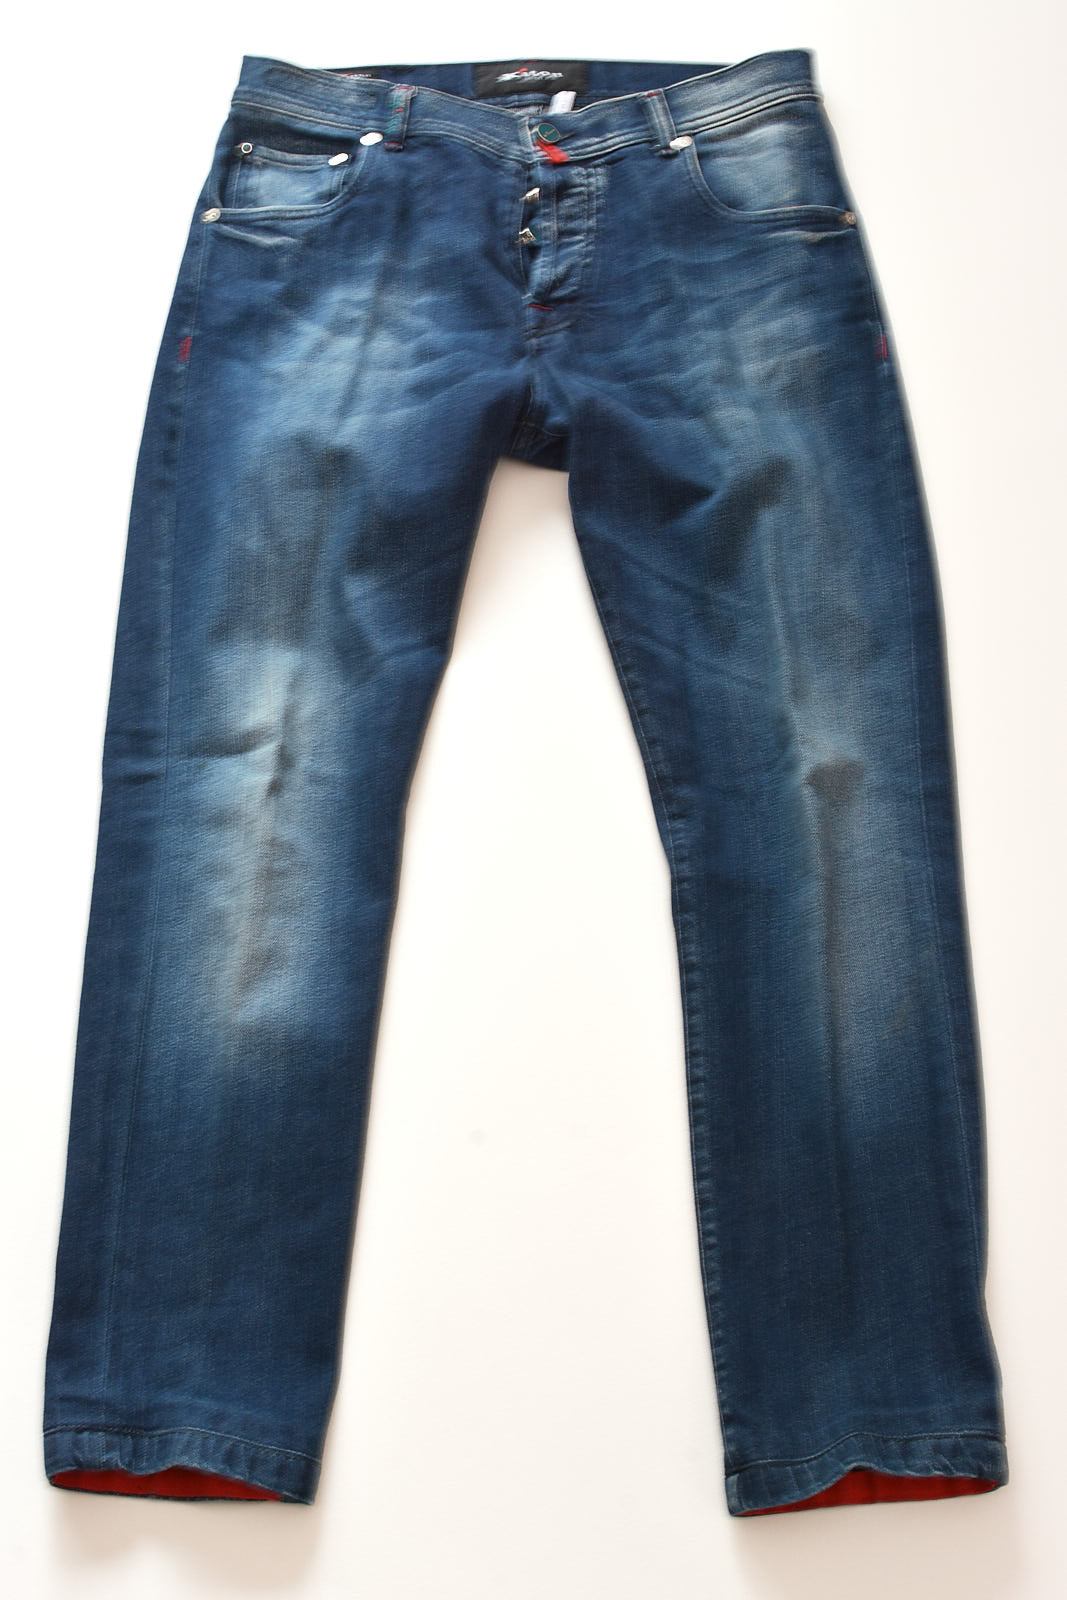 KITON Napoli Handmade Blue Denim Stretch Jeans Pants US 32 33